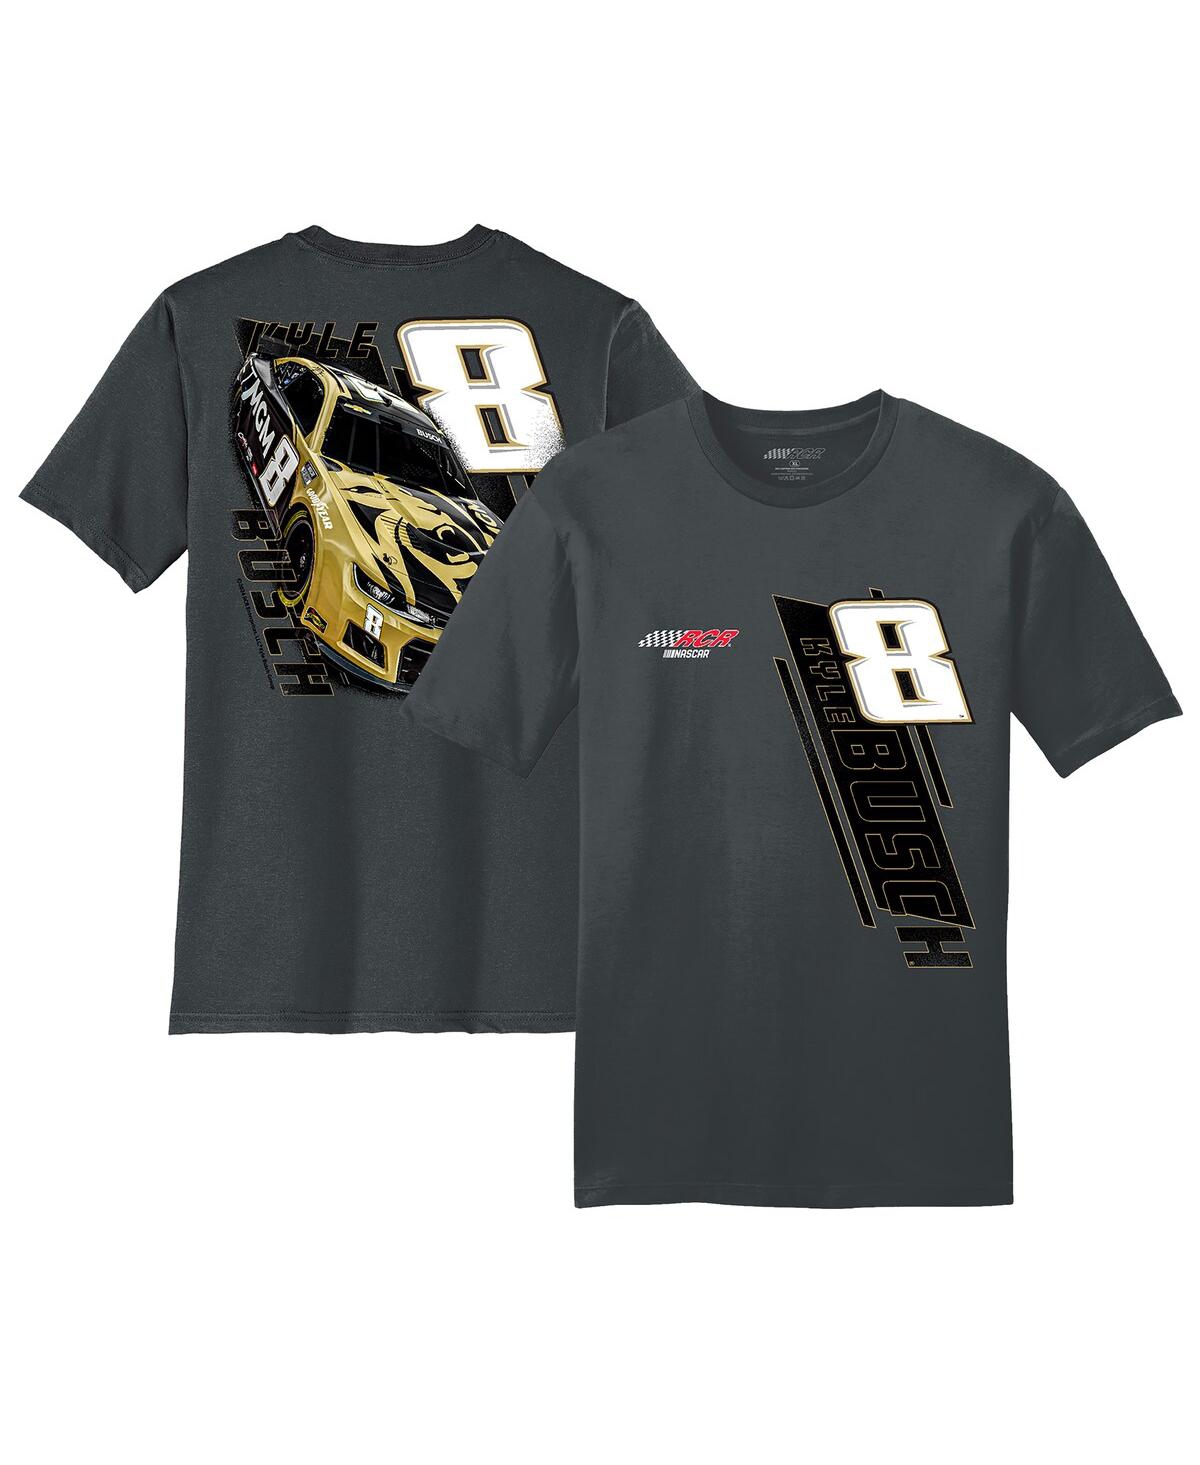 Men's Richard Childress Racing Team Collection Charcoal Kyle Busch Car T-shirt - Charcoal